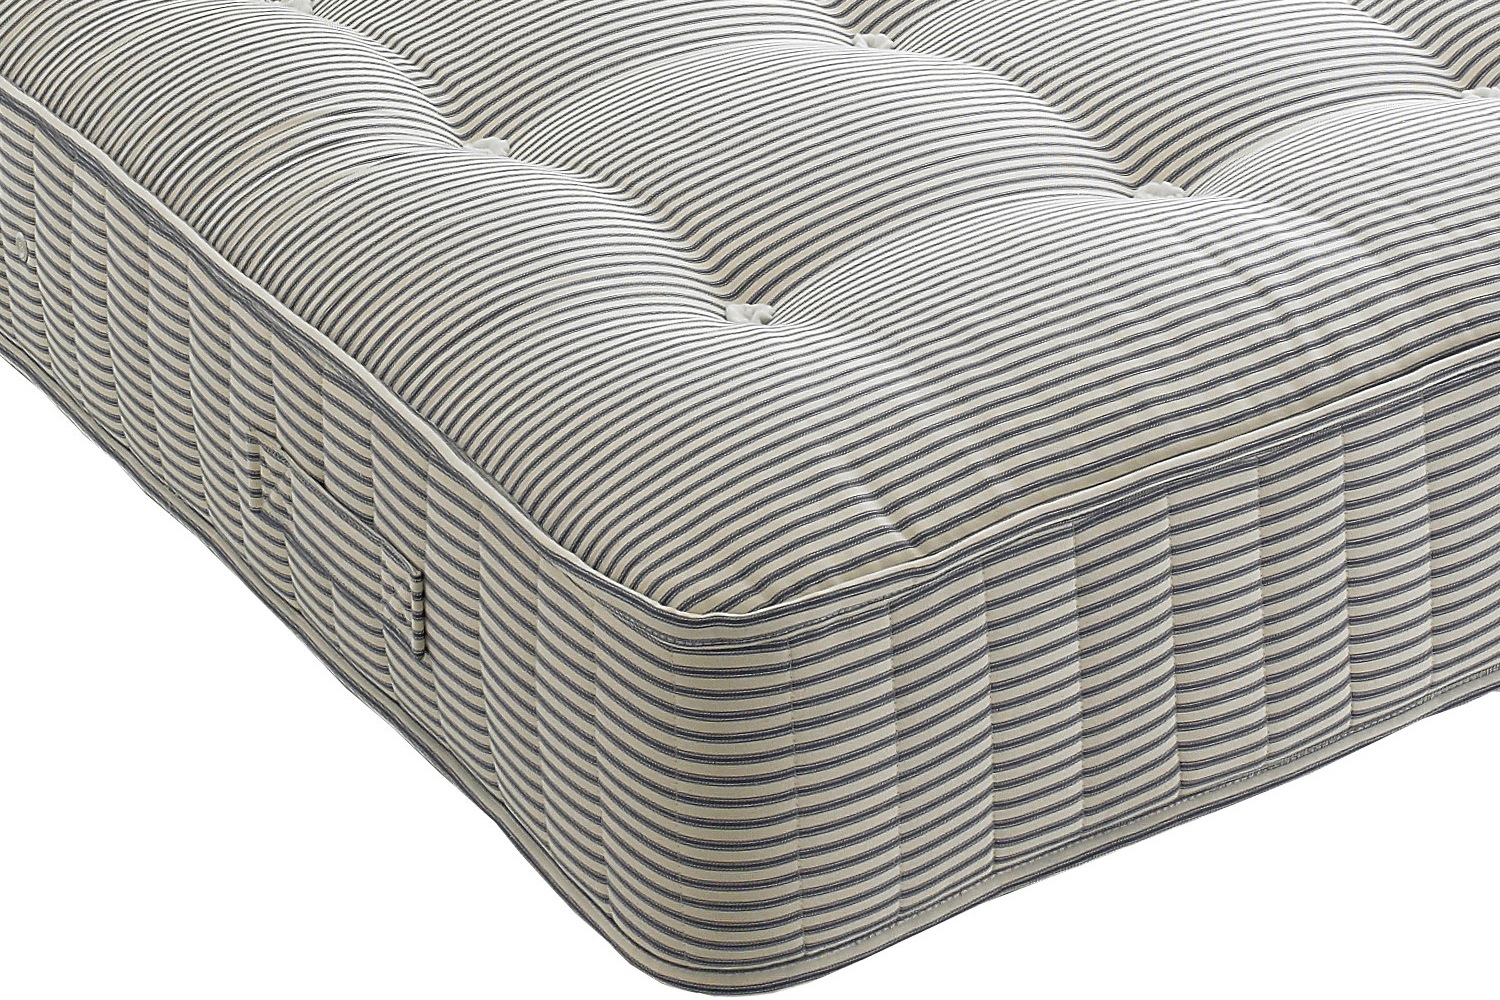 1000 pocket spring mattress review